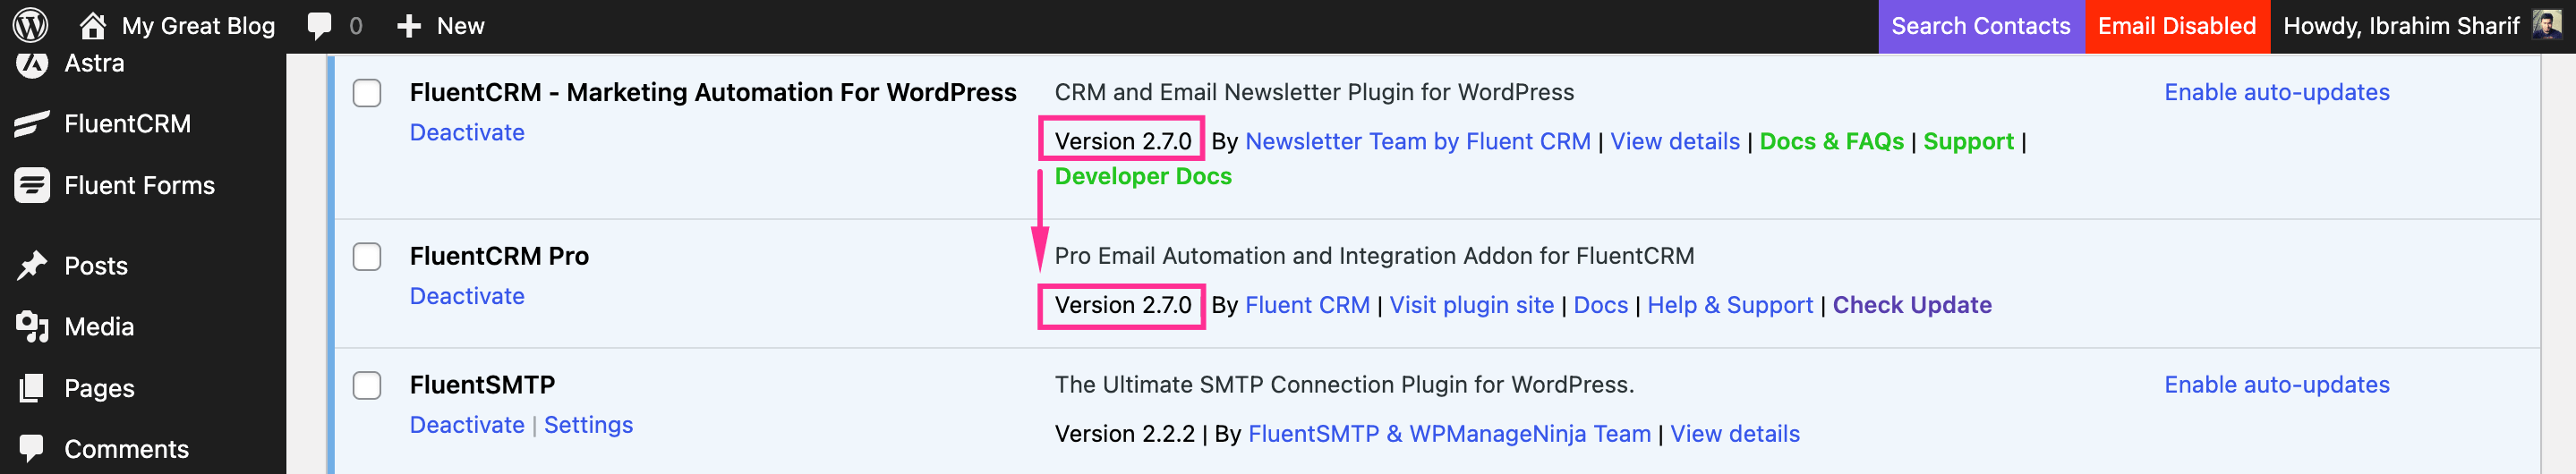 wordpress fluentcrm plugin versions